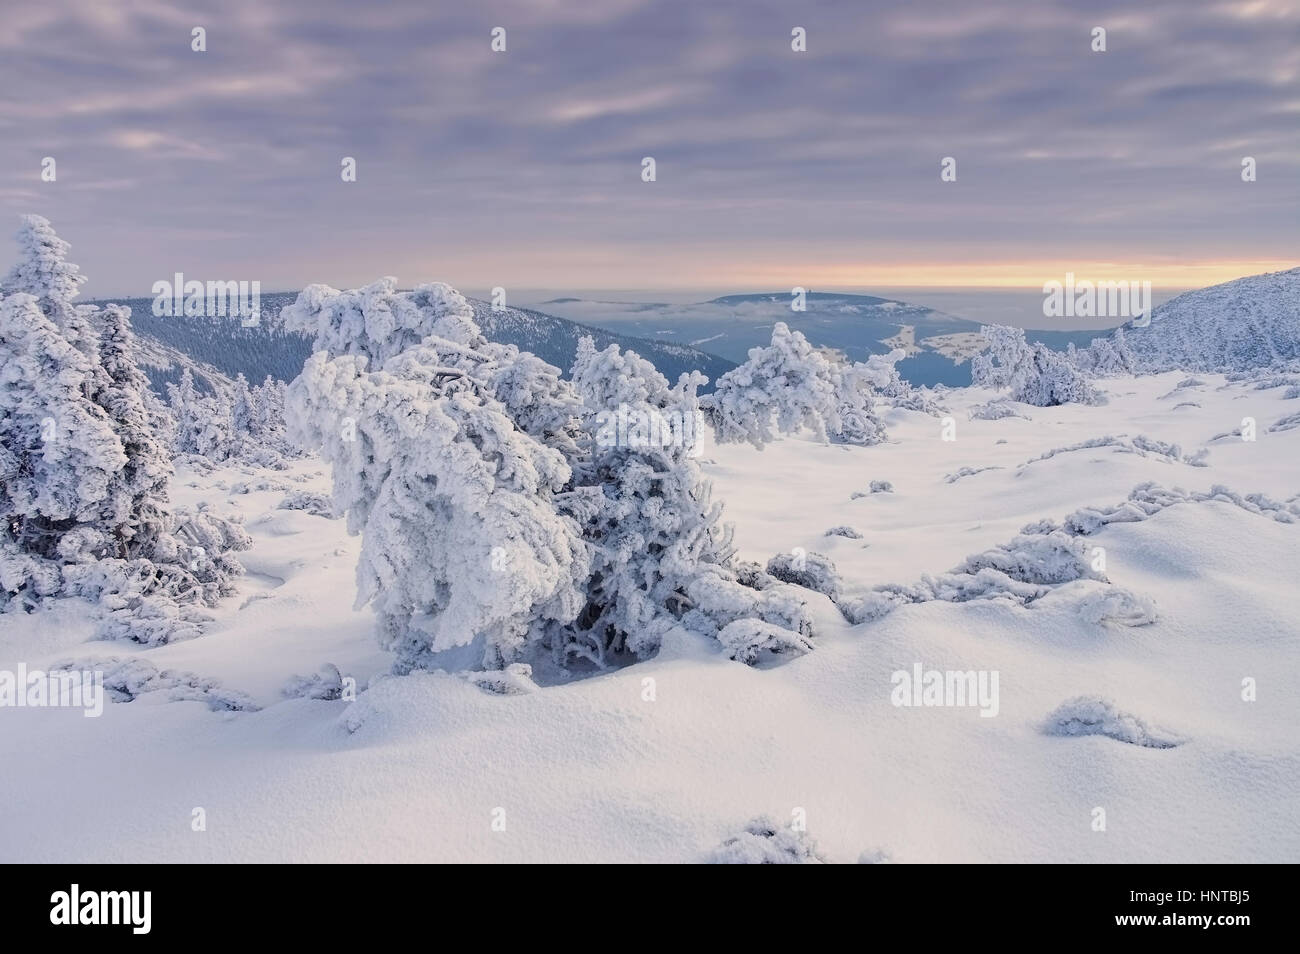 Riesengebirge im Winter - Giant Mountains in snowy winter Stock Photo